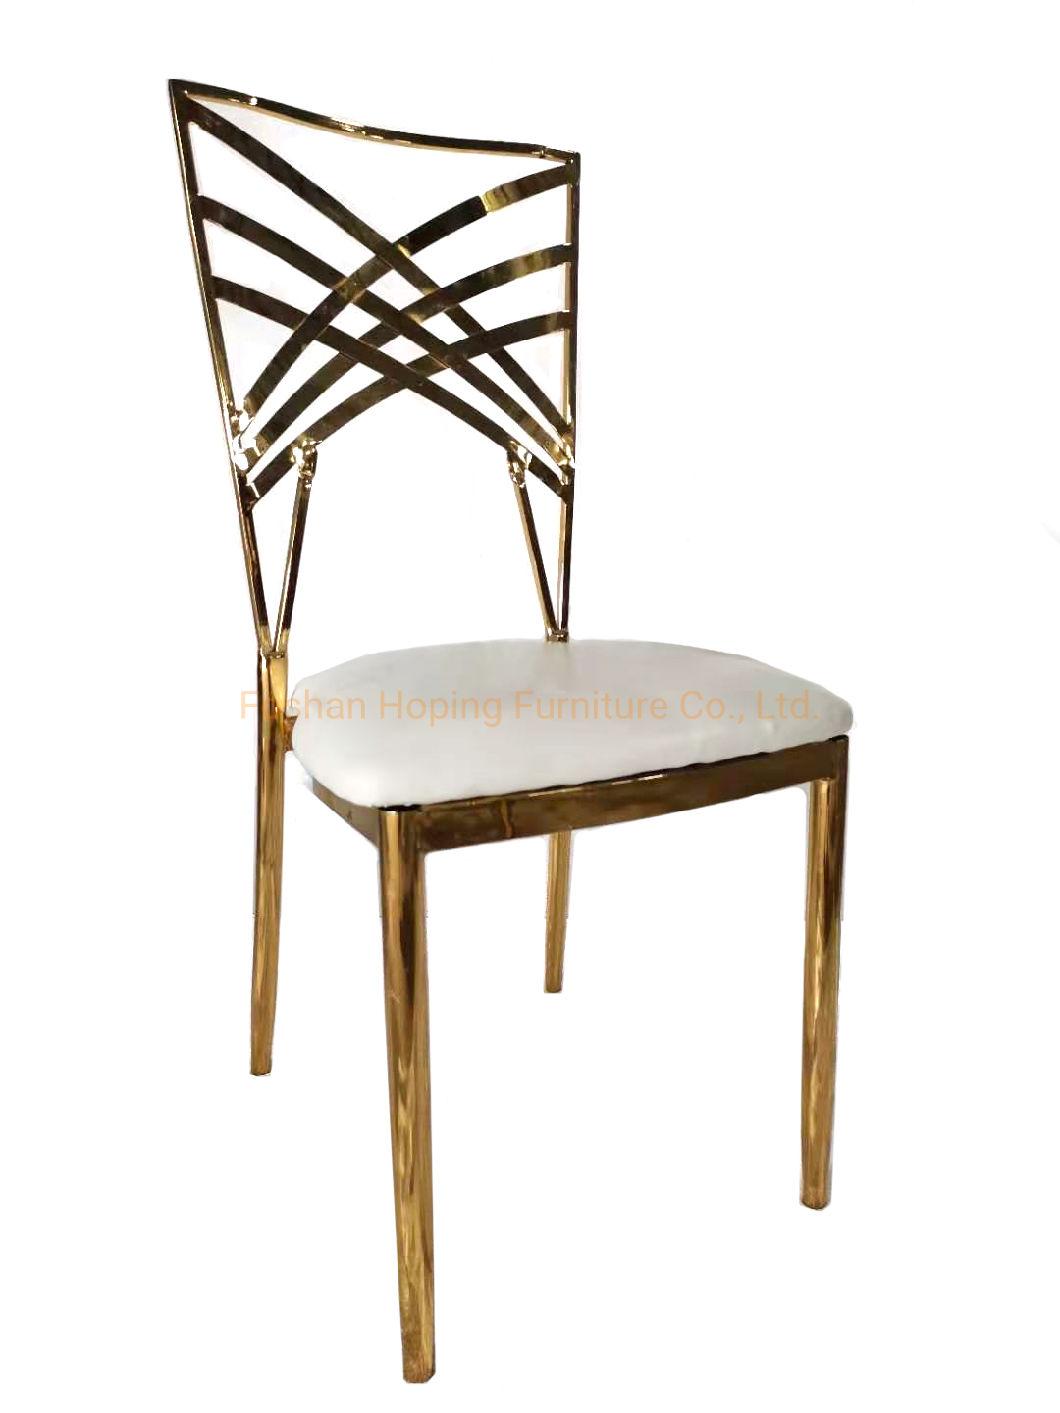 Italy Design Style Elegant Stainless-Steel Chair Model Wedding Dining Restaurant Hotel Furniture